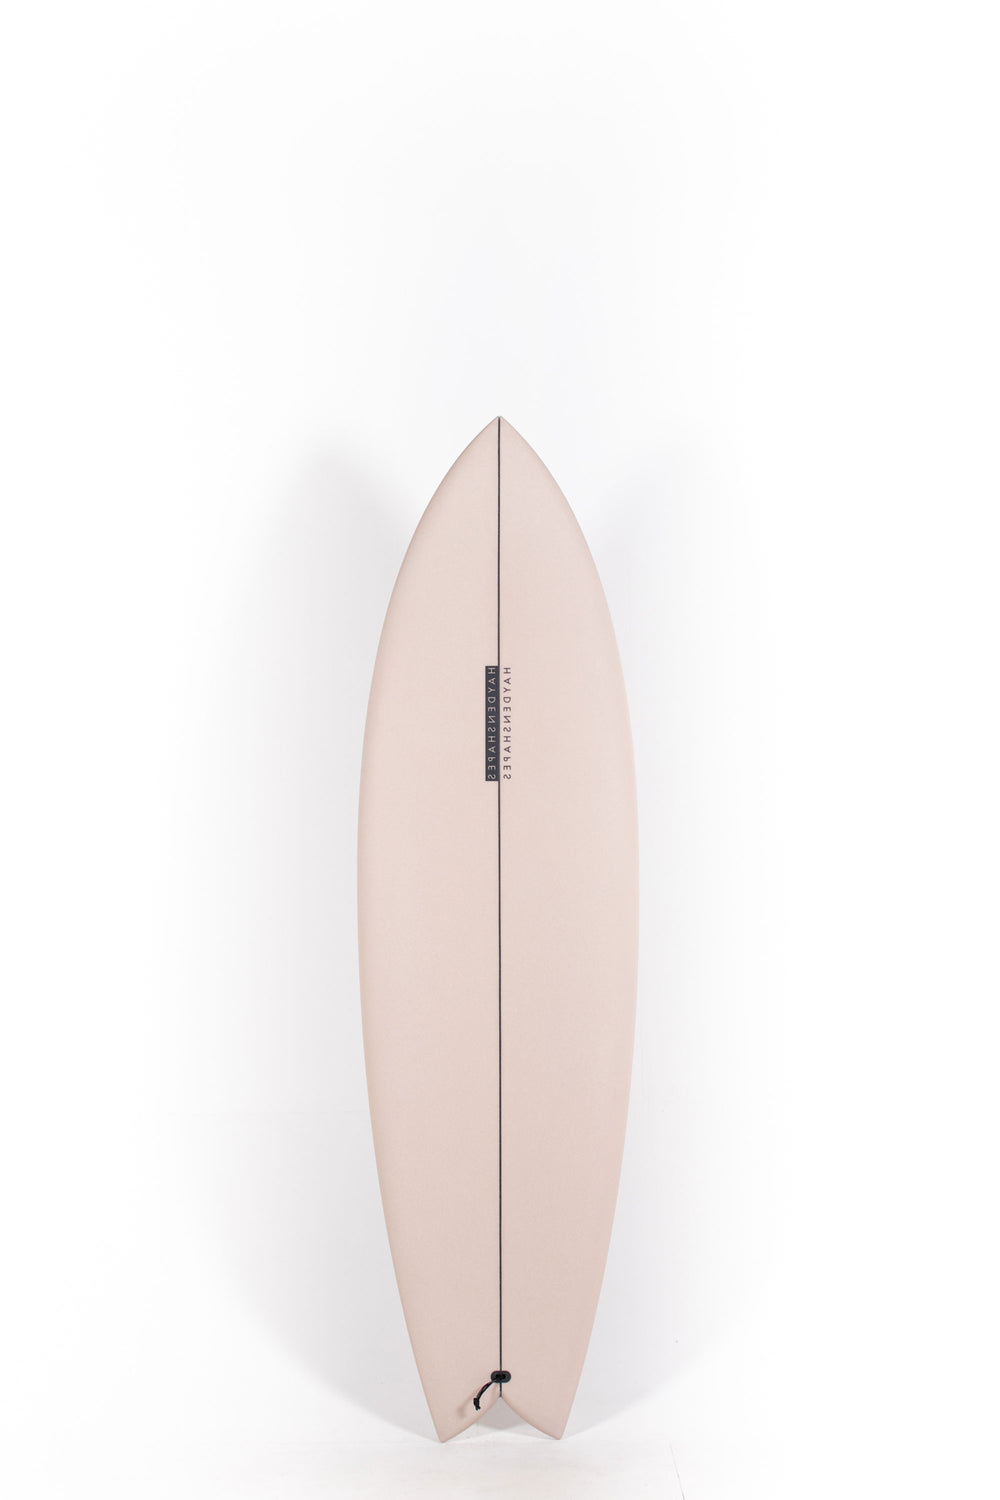 Pukas Surf Shop - HaydenShapes Surfboard - HYPTO KRYPTO TWIN PU - 6'6